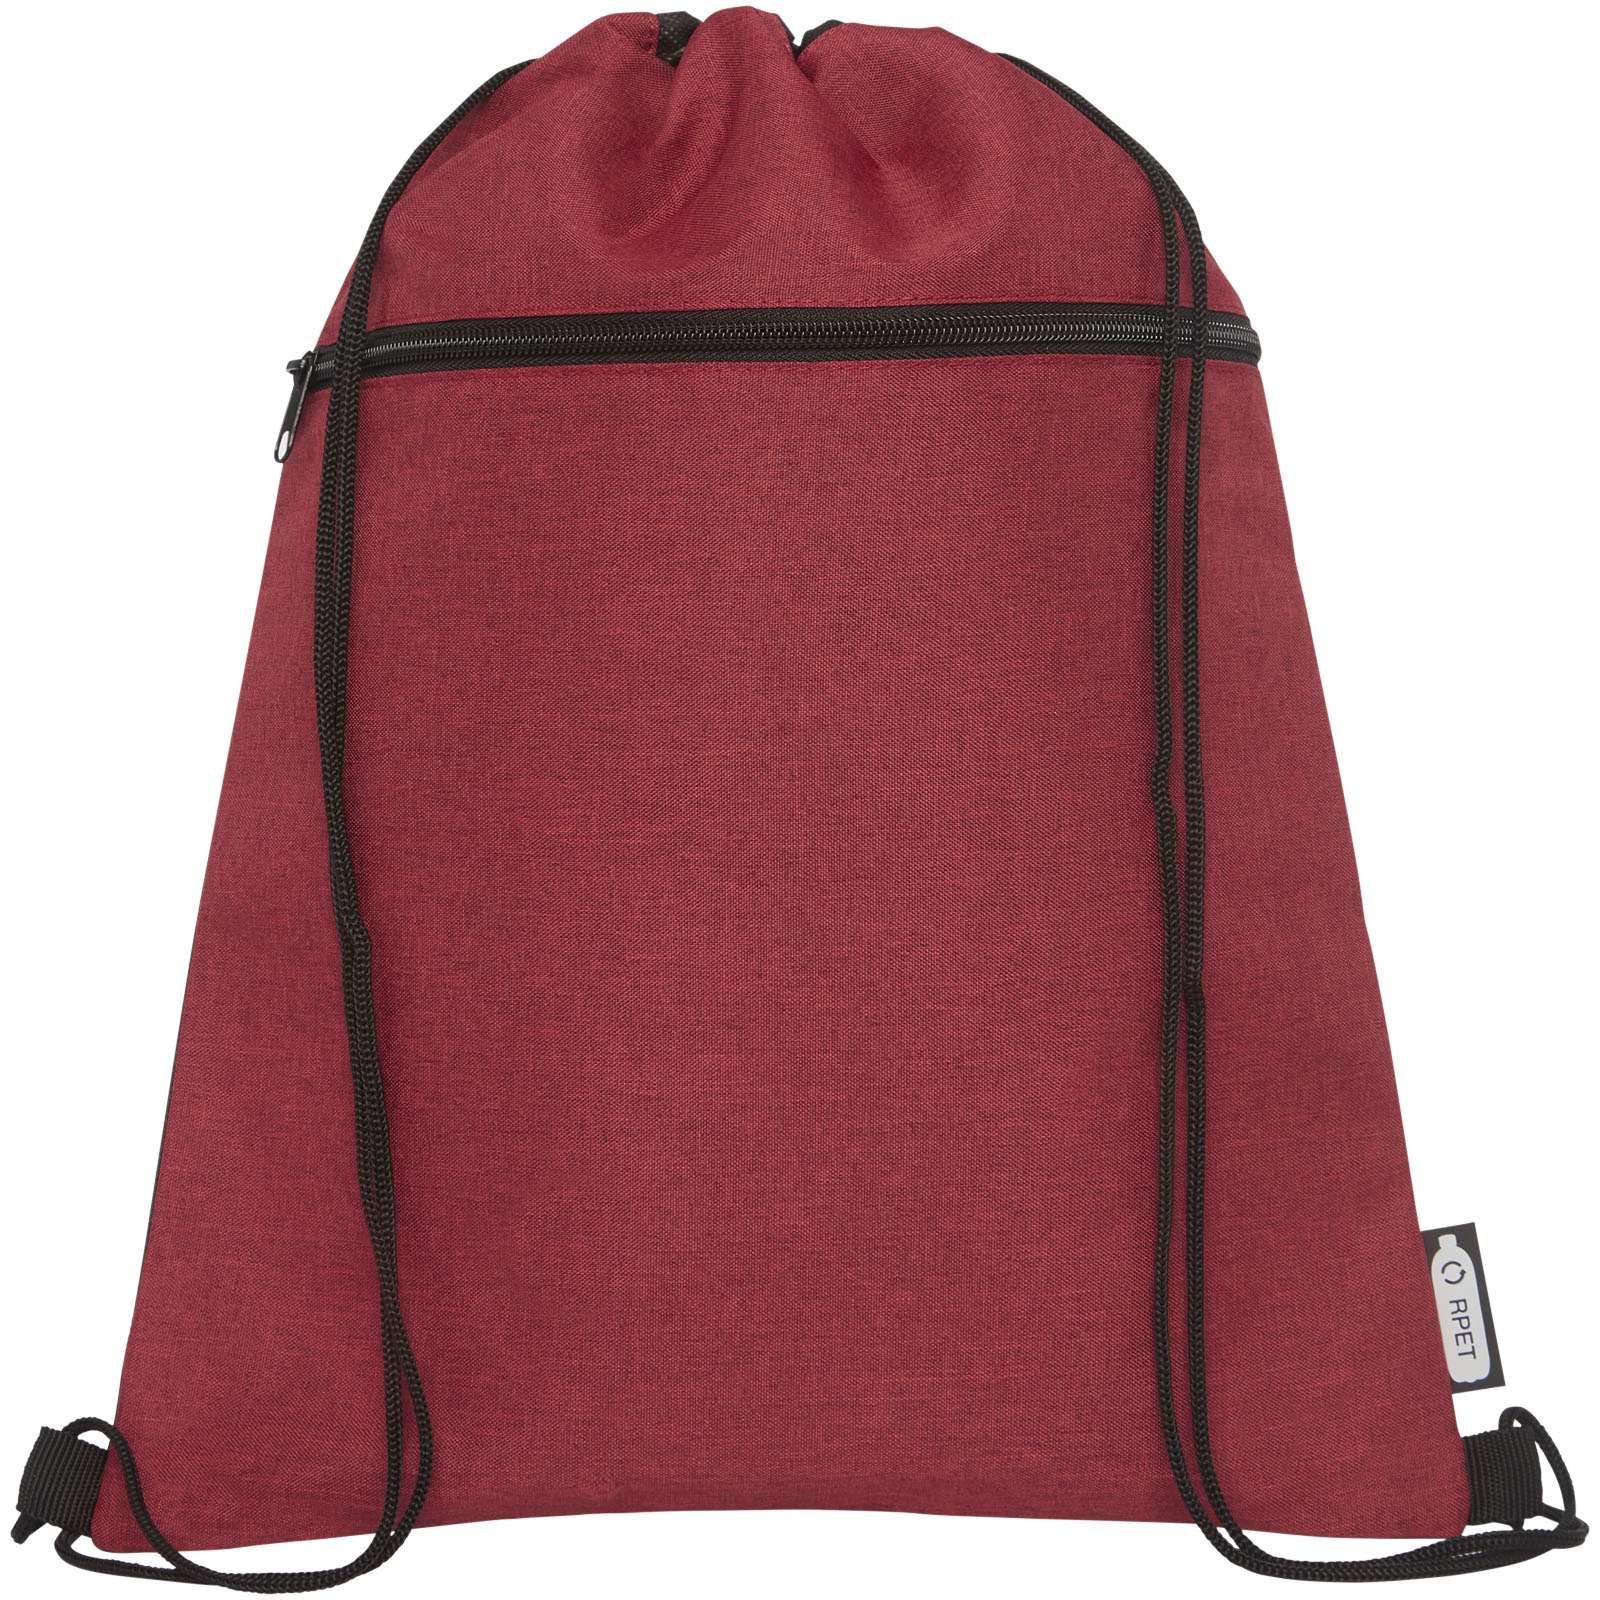 Advertising Drawstring Bags - Ross RPET drawstring bag 5L - 1